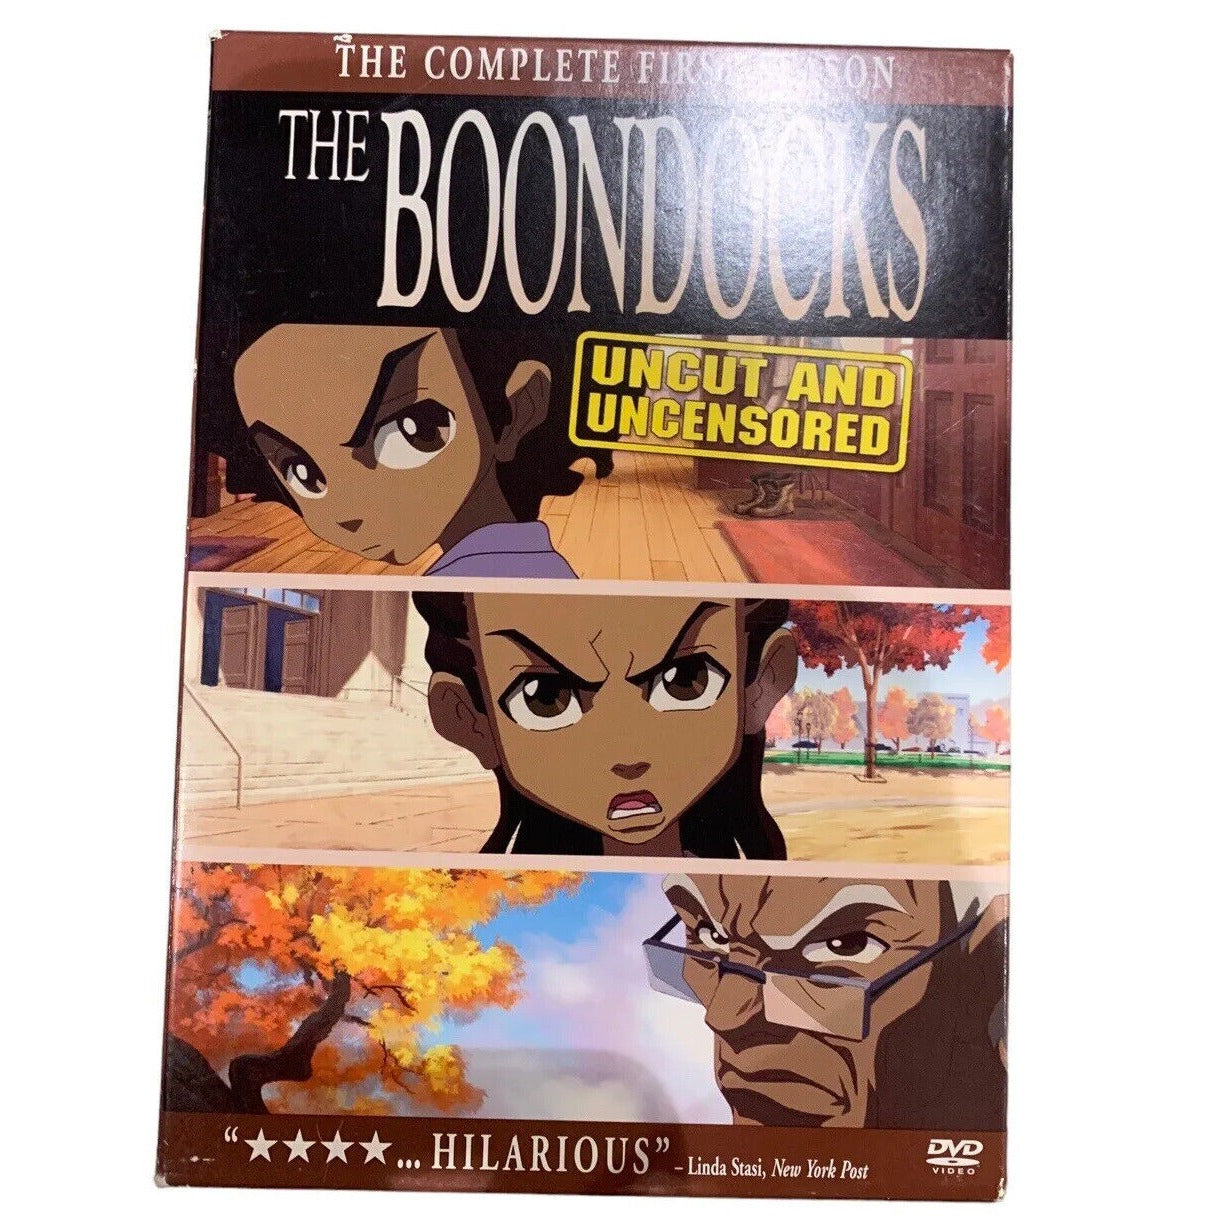 The Boondocks - Complete First Season (DVD, 2006, 3-Disc Set)